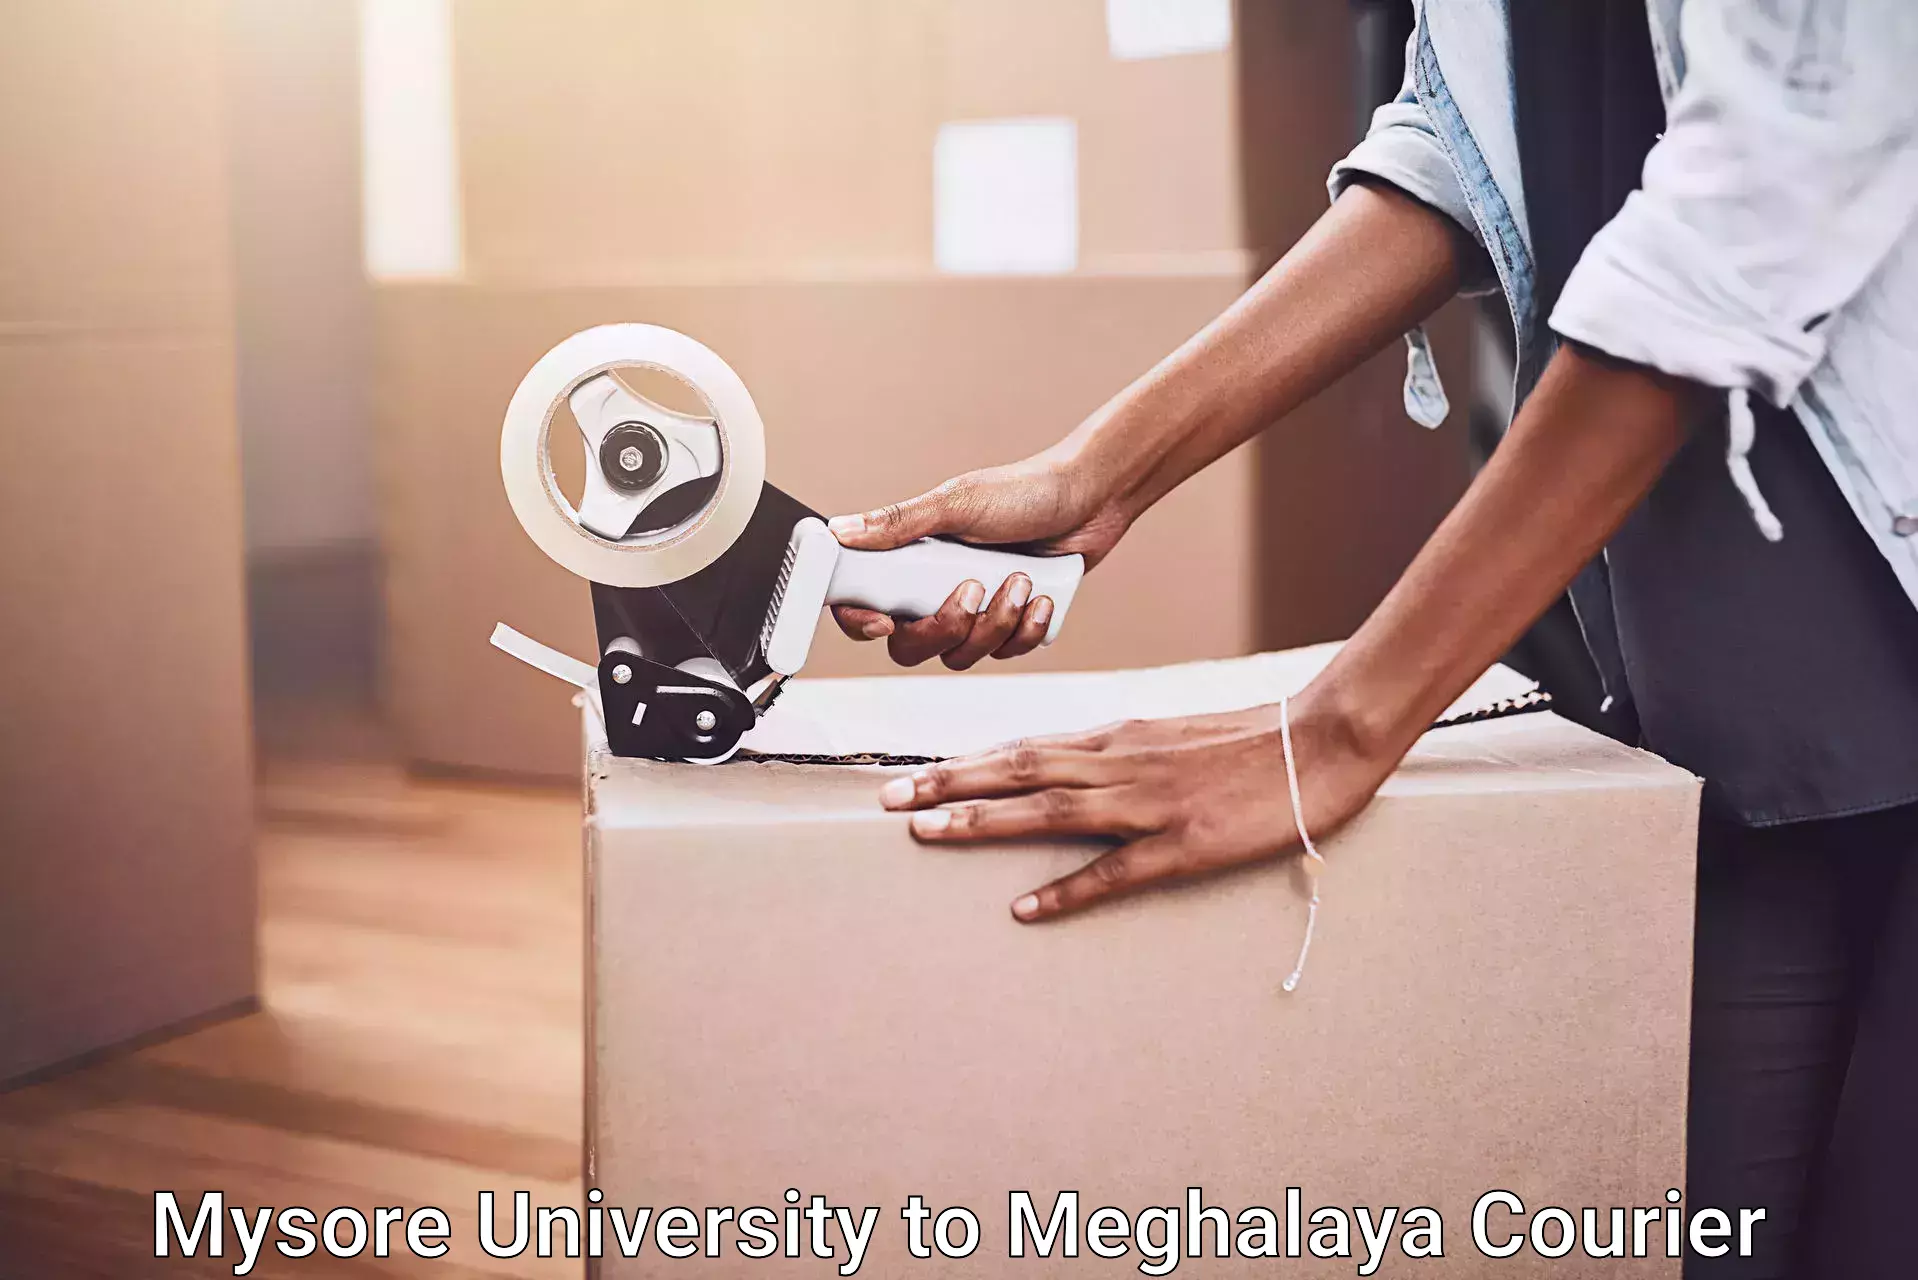 Skilled furniture movers Mysore University to Shillong